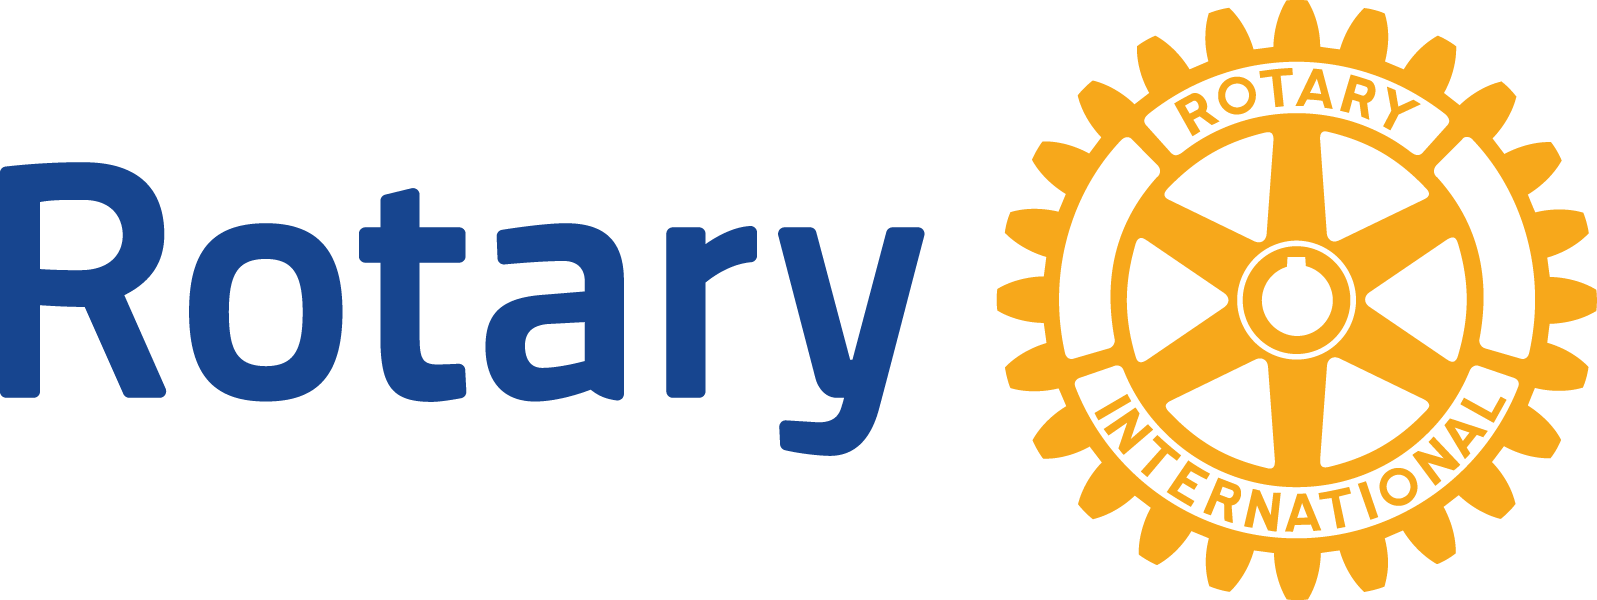 Rotary International Logo Vector (1597x600)